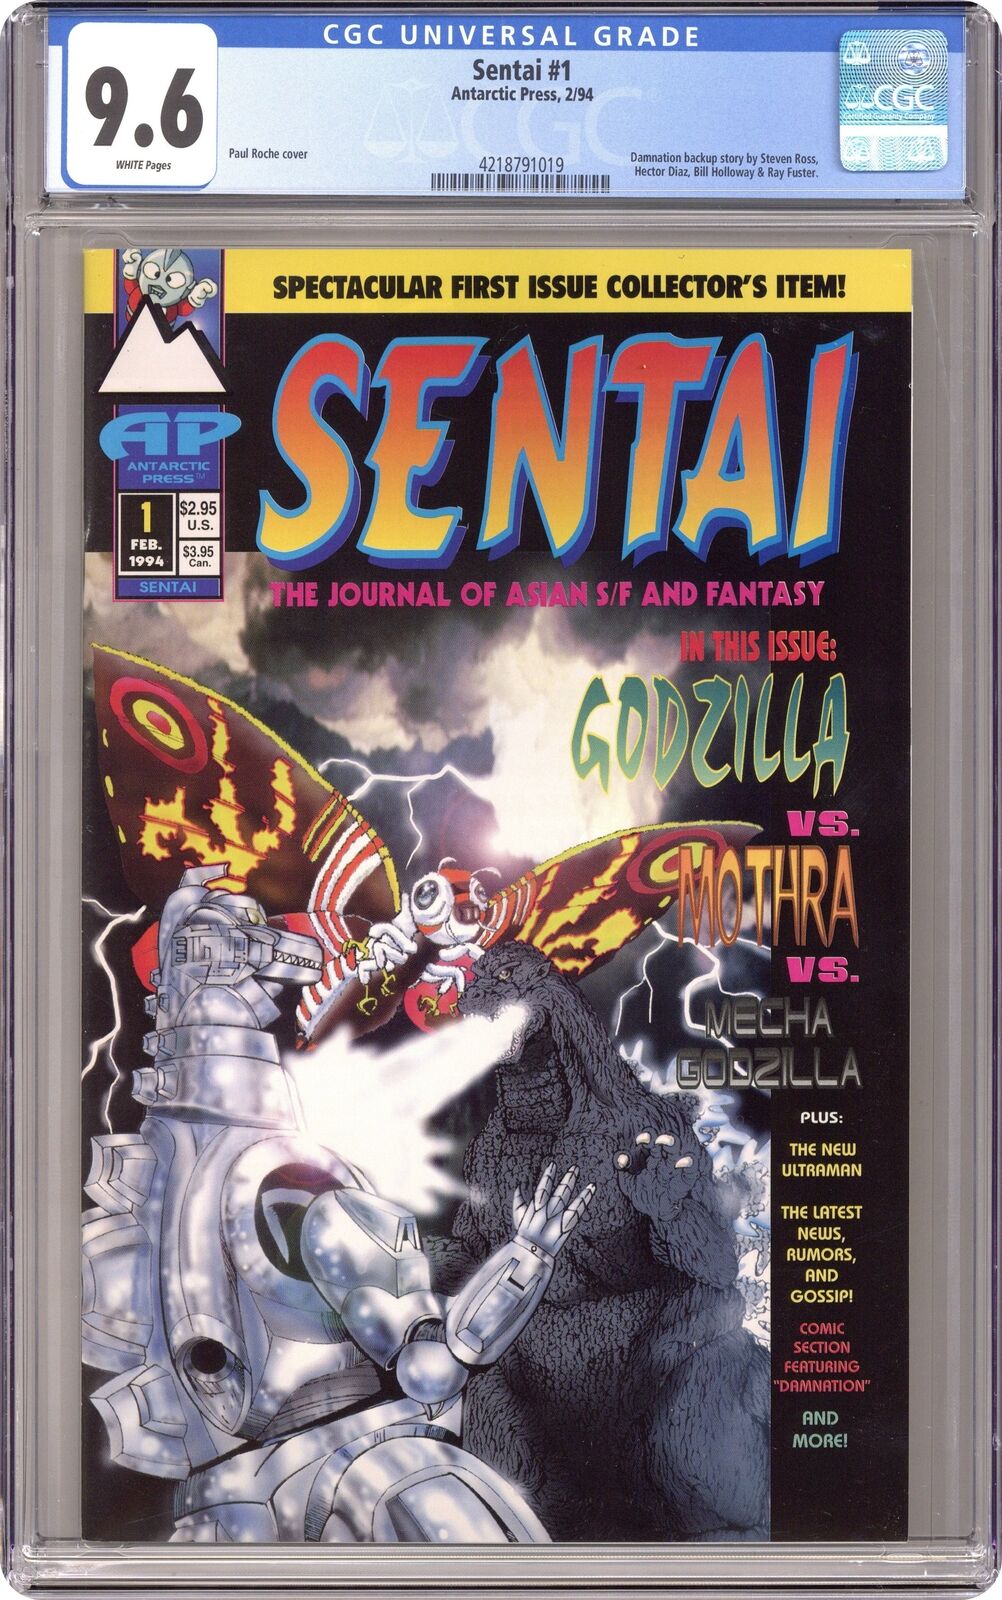 Sentai #1 CGC 9.6 1994 4218791019